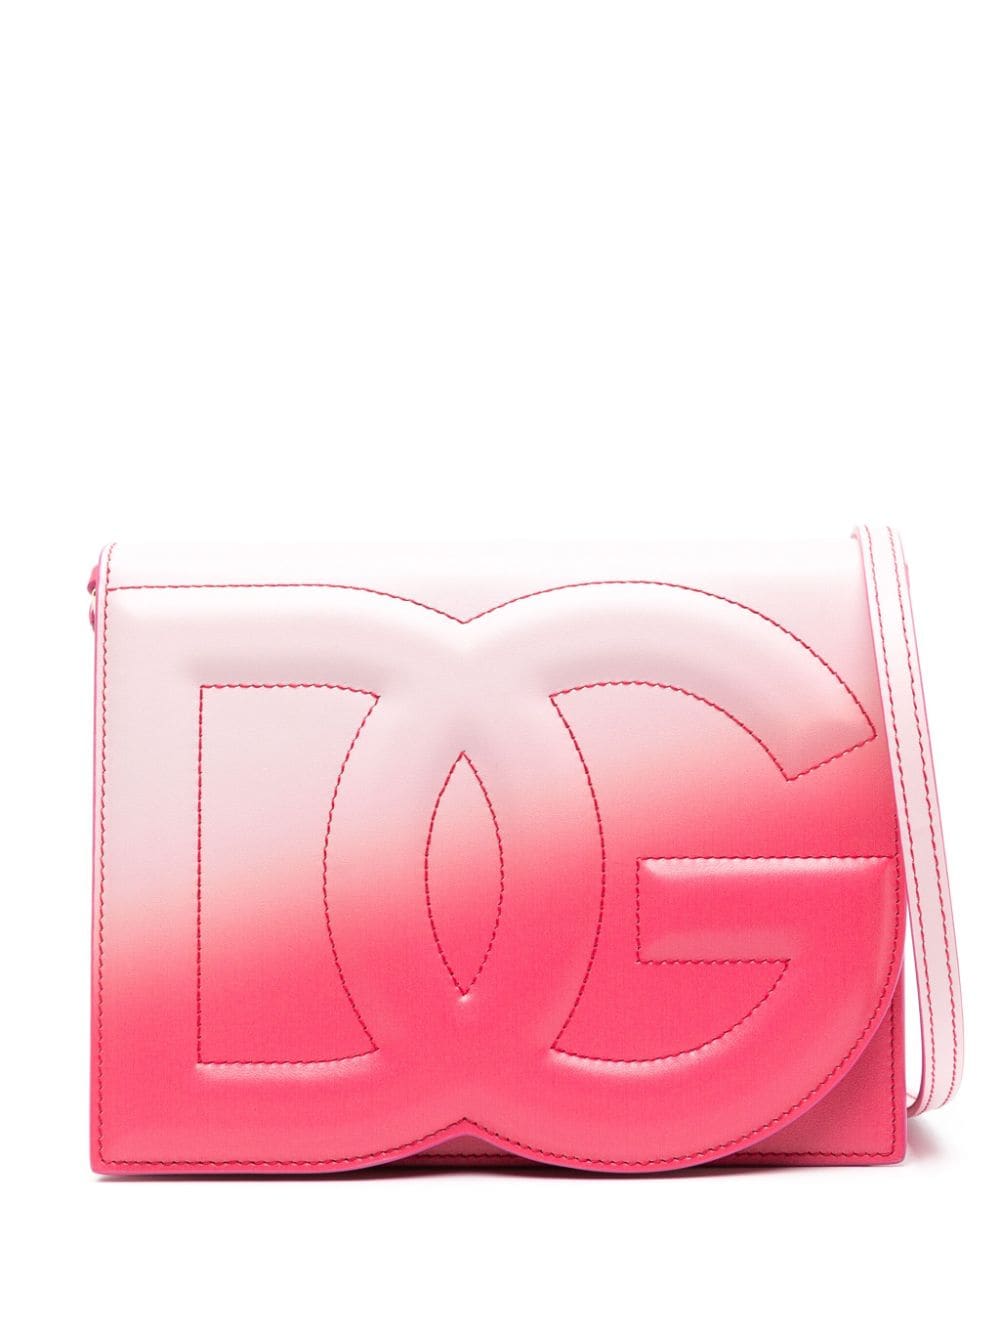 DOLCE & GABBANA Luxurious Pouch Handbag in HF5AC for Women